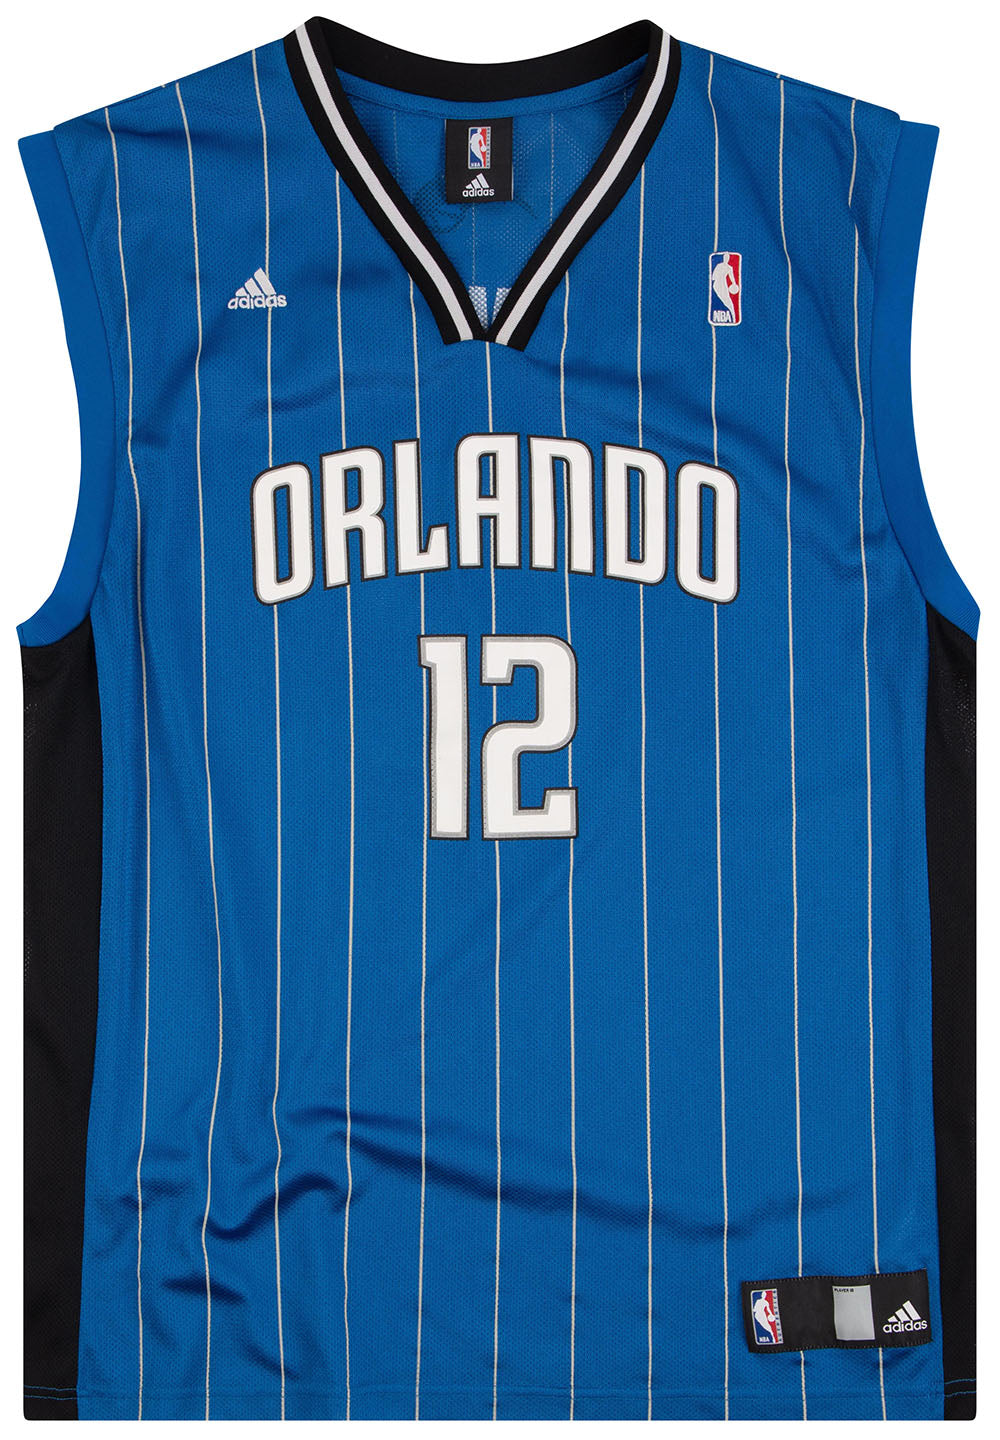 Adidas INT Swingman NBA Orlando Magic Jersey HOWARD #12 Y38363 Blue